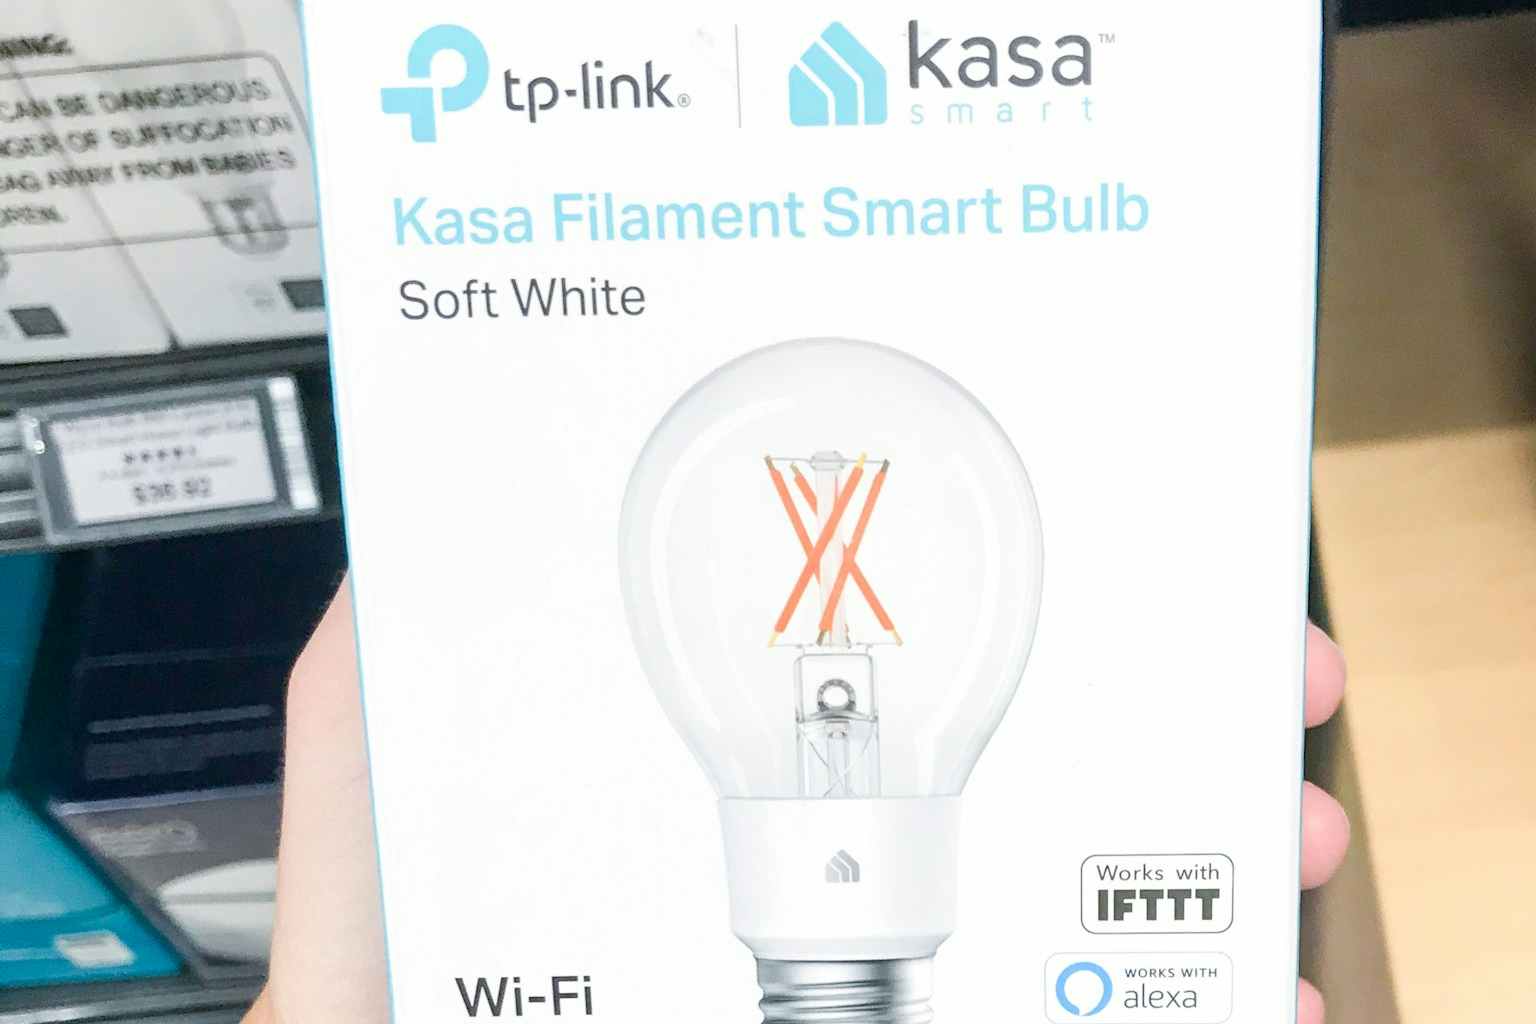 Kasa Smart Light Bulb Drops to $7.45 on Amazon